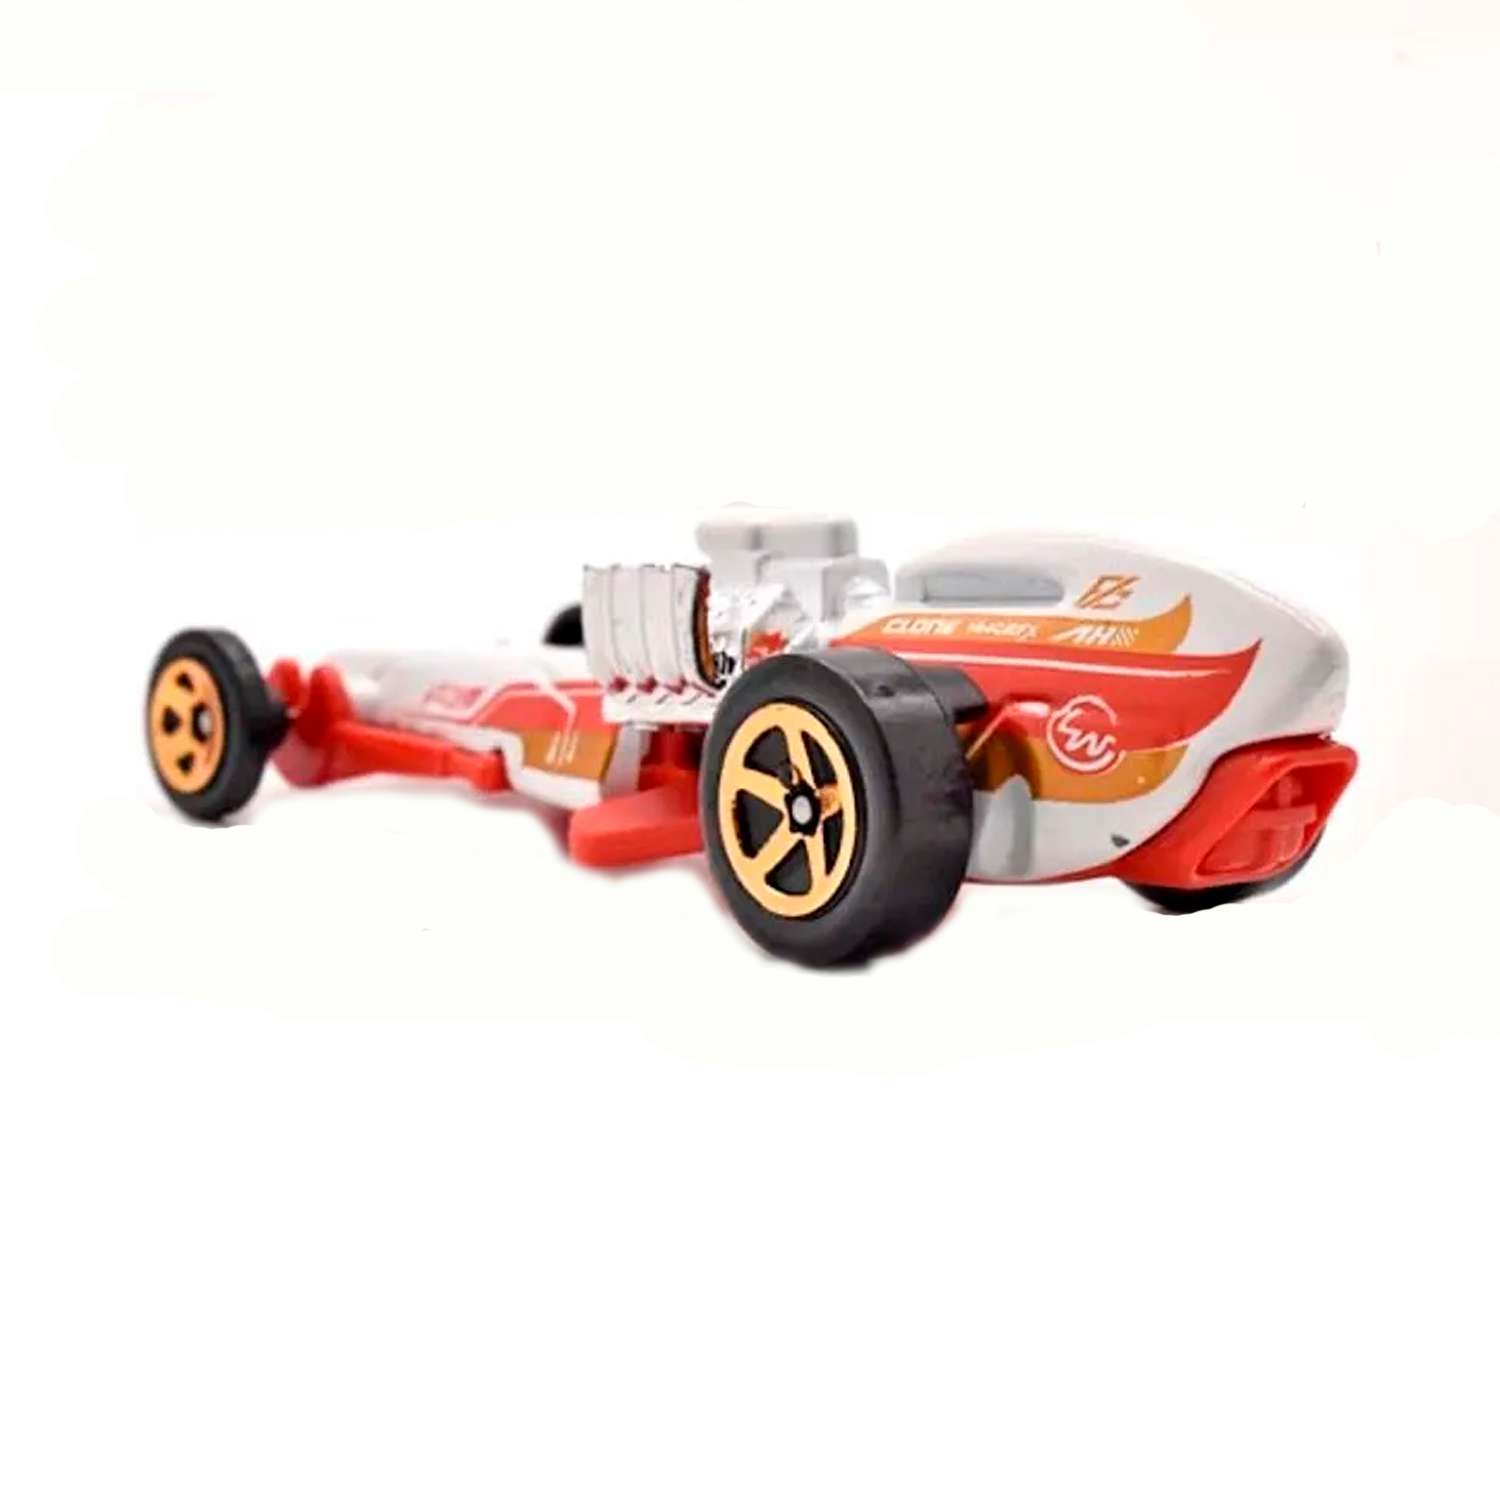 Игрушечная машинка Hot Wheels rockin railer 5785-A171-HKG53 - фото 2